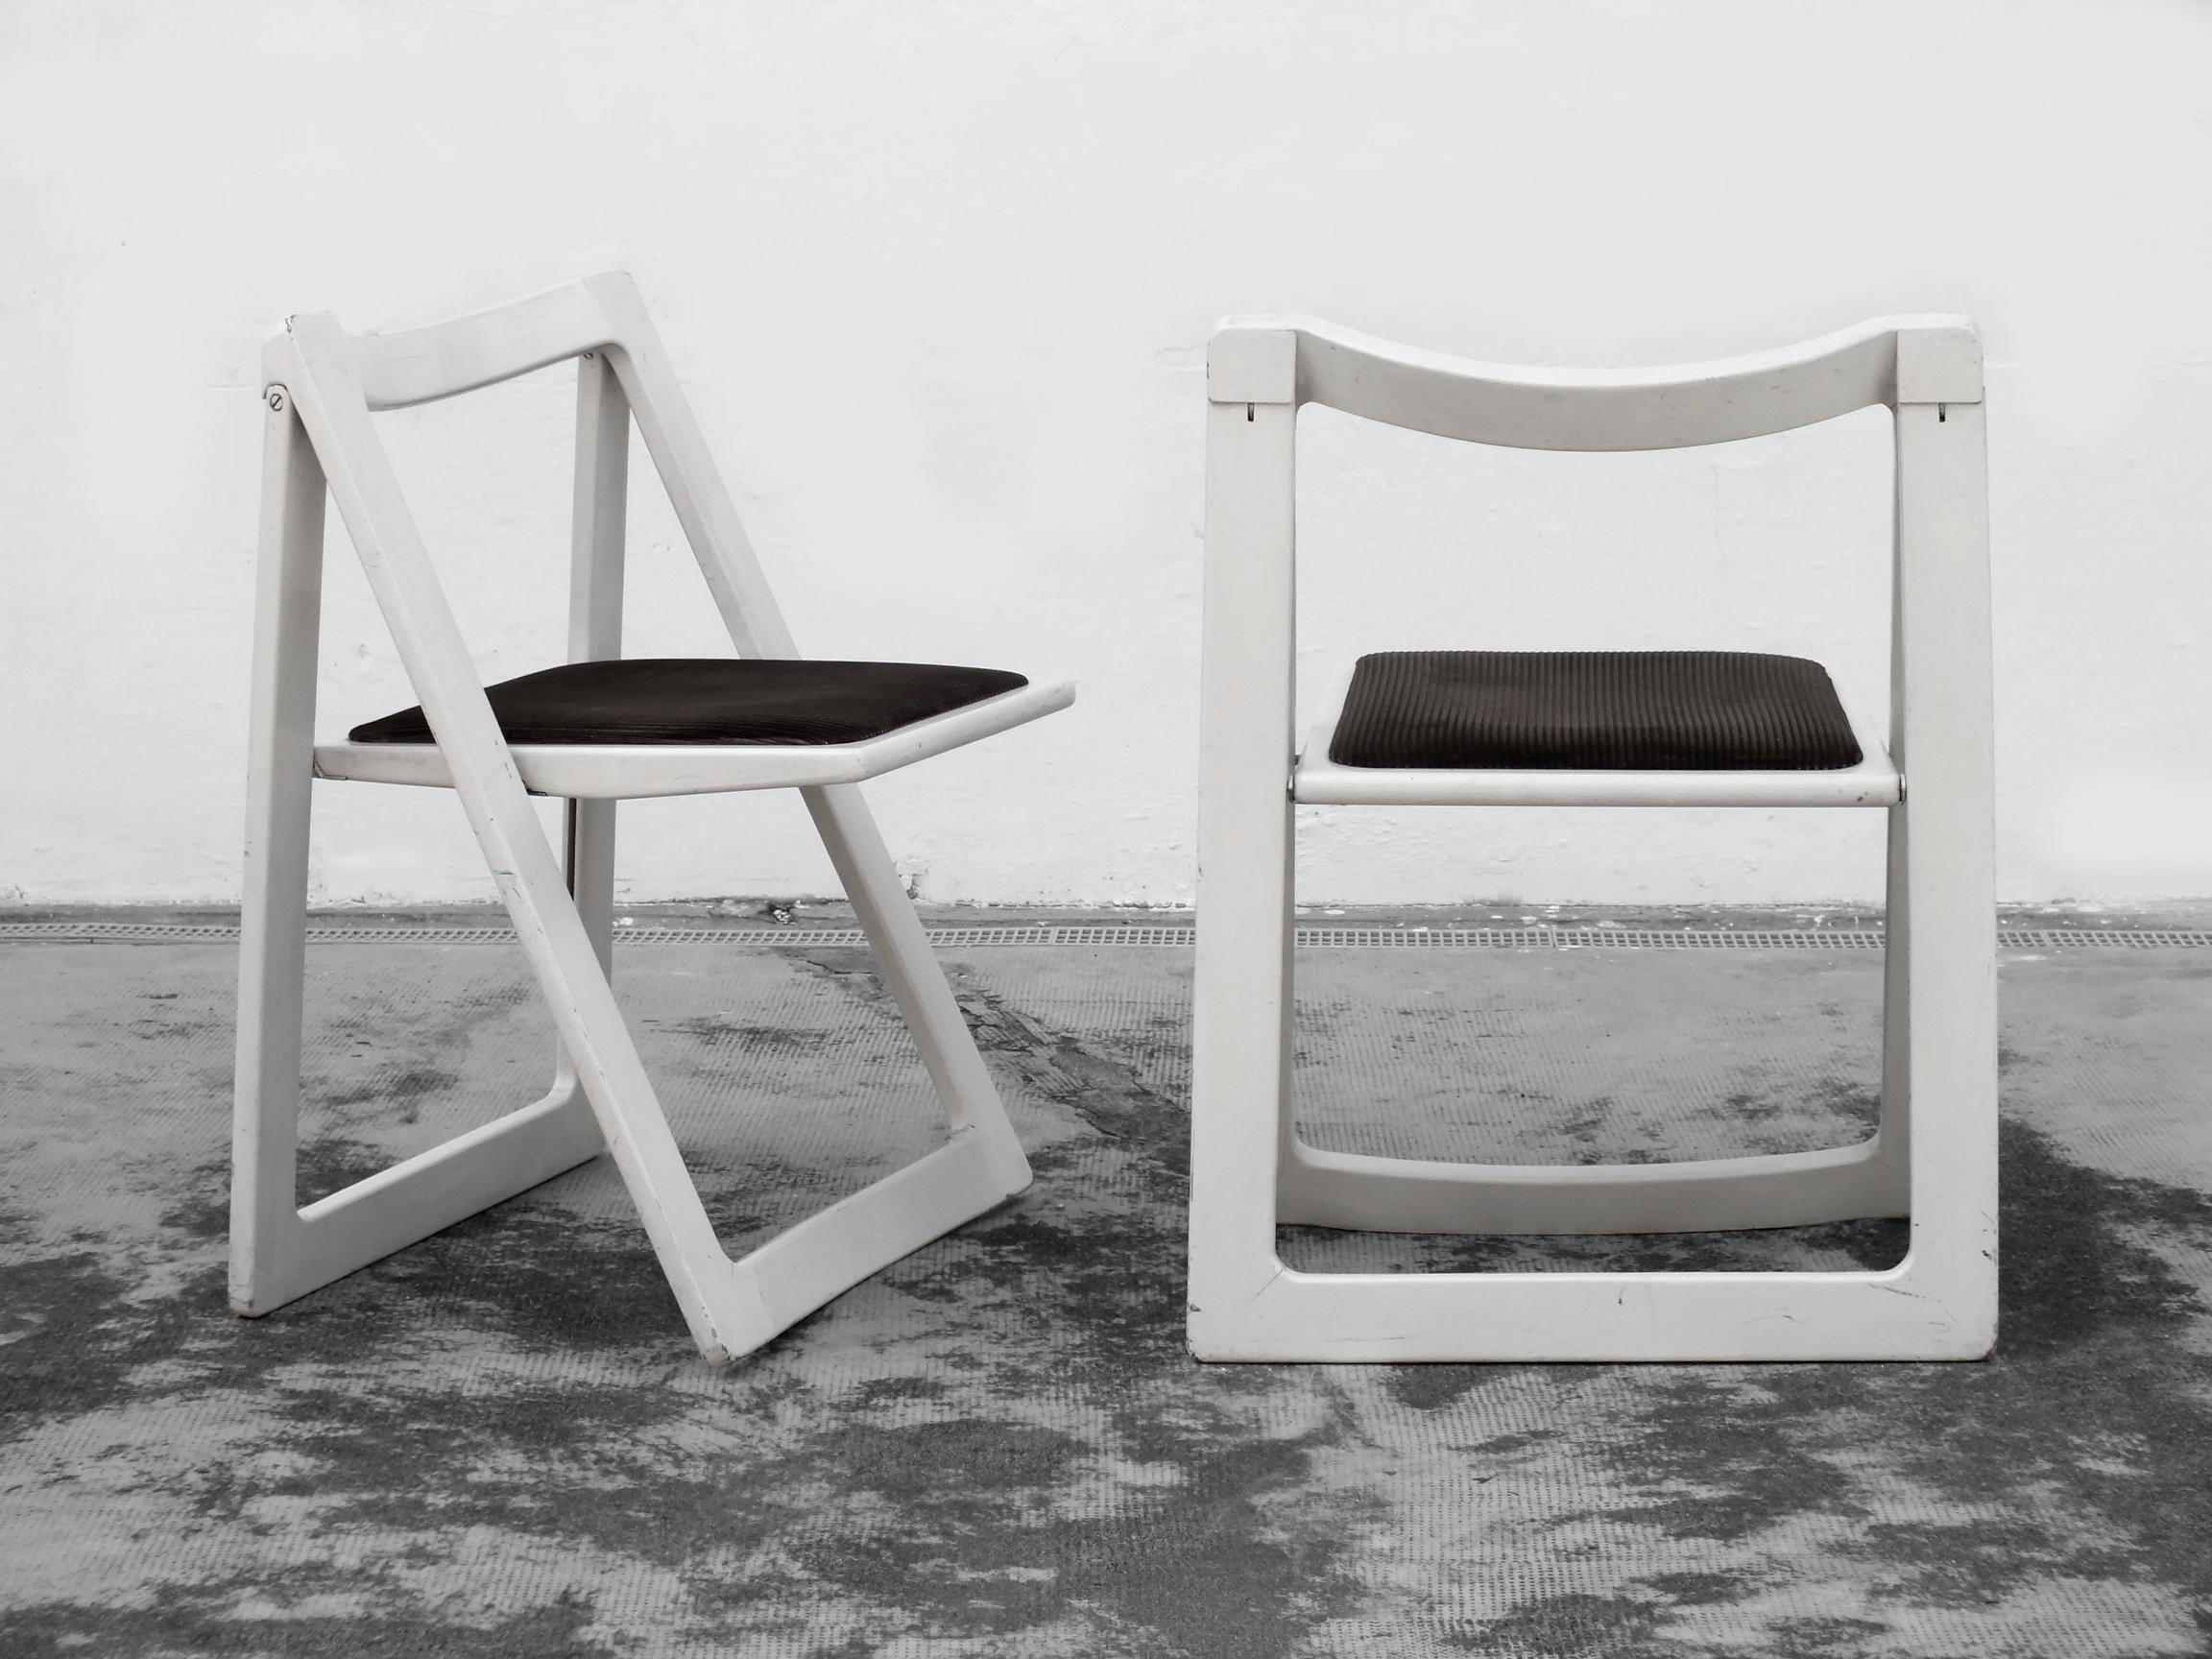 Jacober Aldo and D'Aniello design Bazzani Itaky in years '70 two Trieste chairs In Good Condition For Sale In Biella, IT